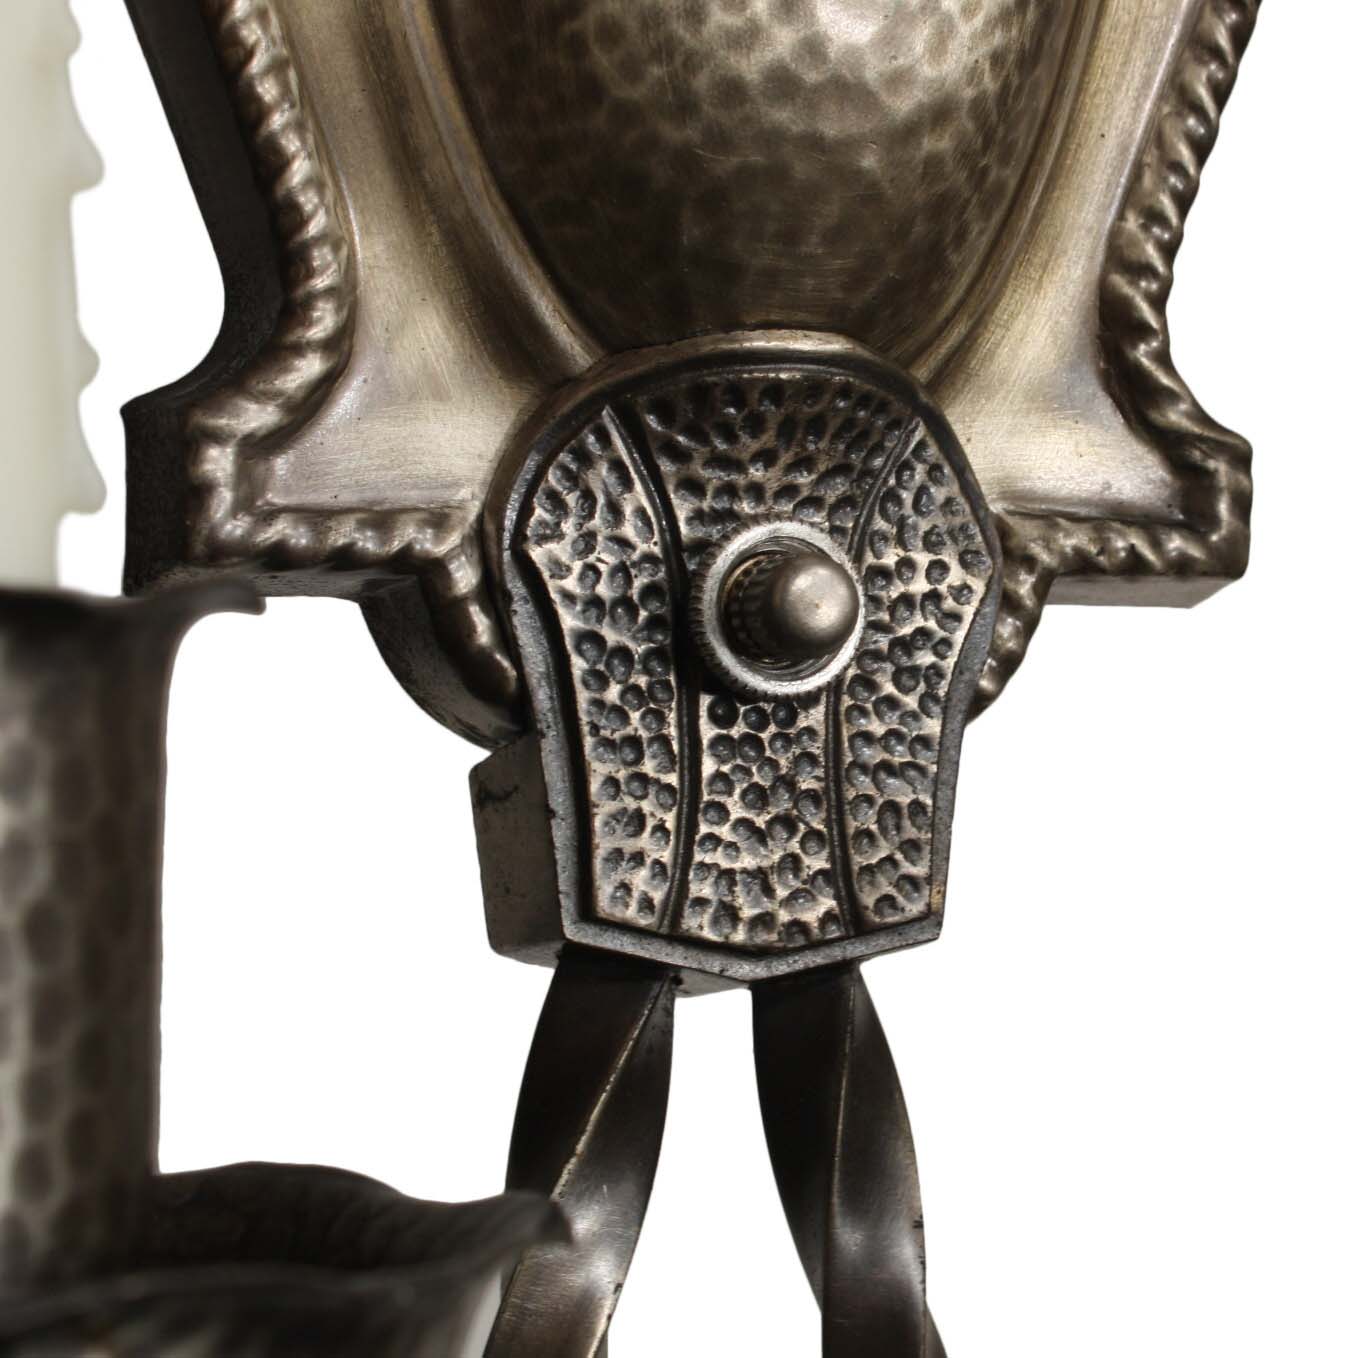 Tudor Sconce Pair in Darkened Nickel, Antique Lighting-59407